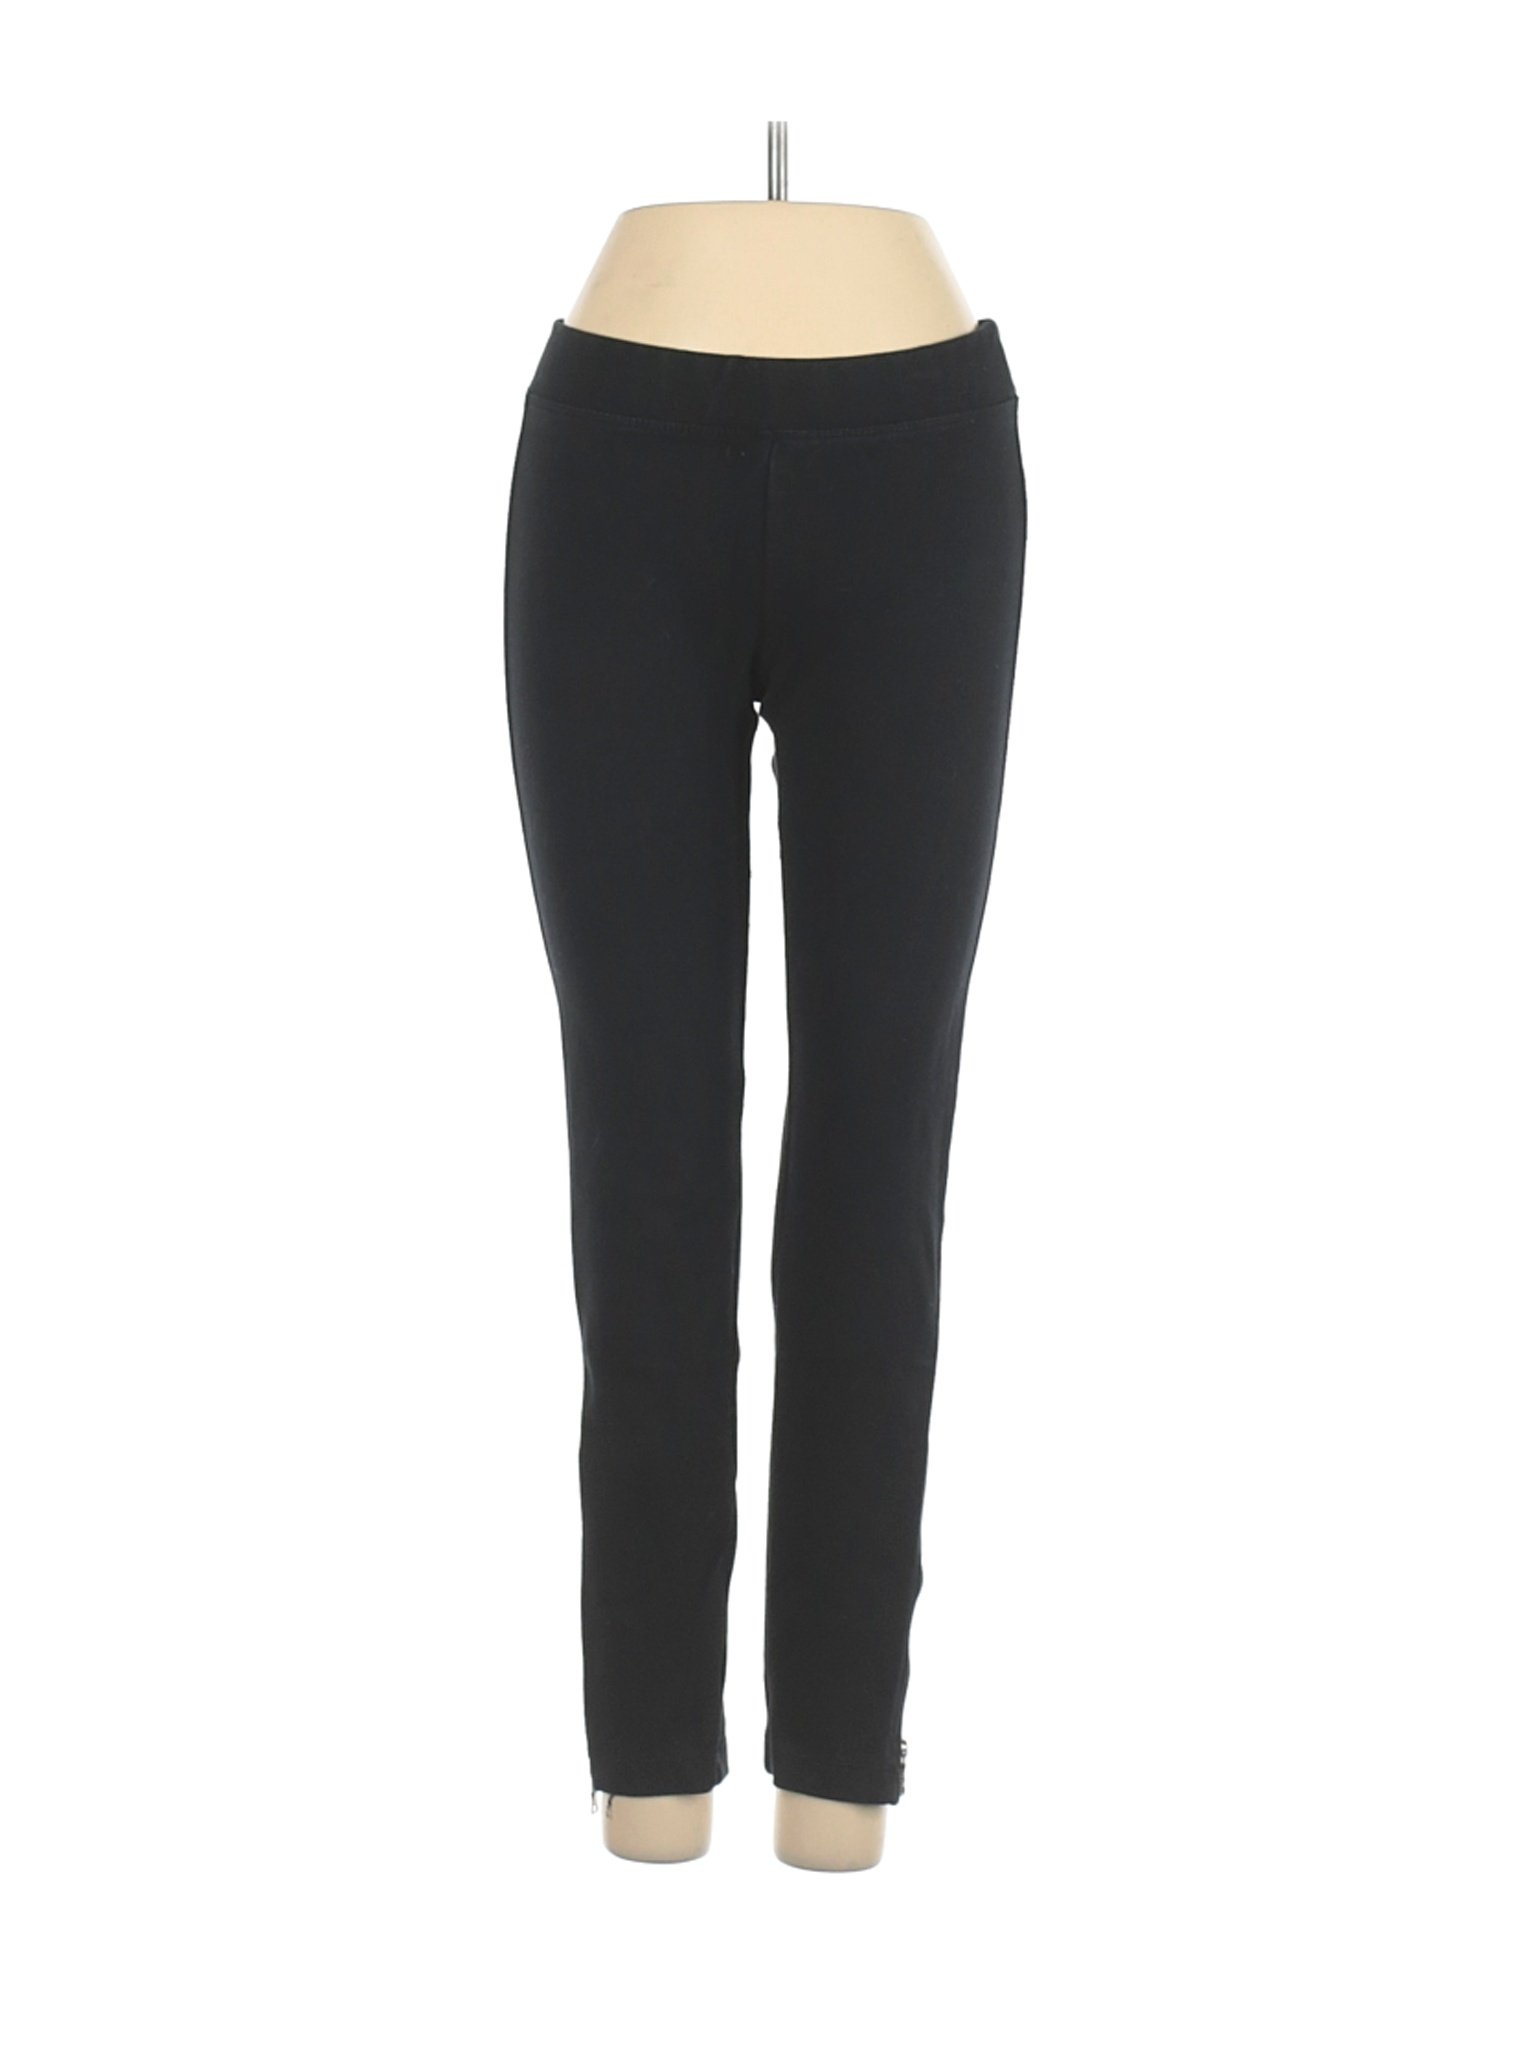 Gap Women Black Casual Pants XS | eBay